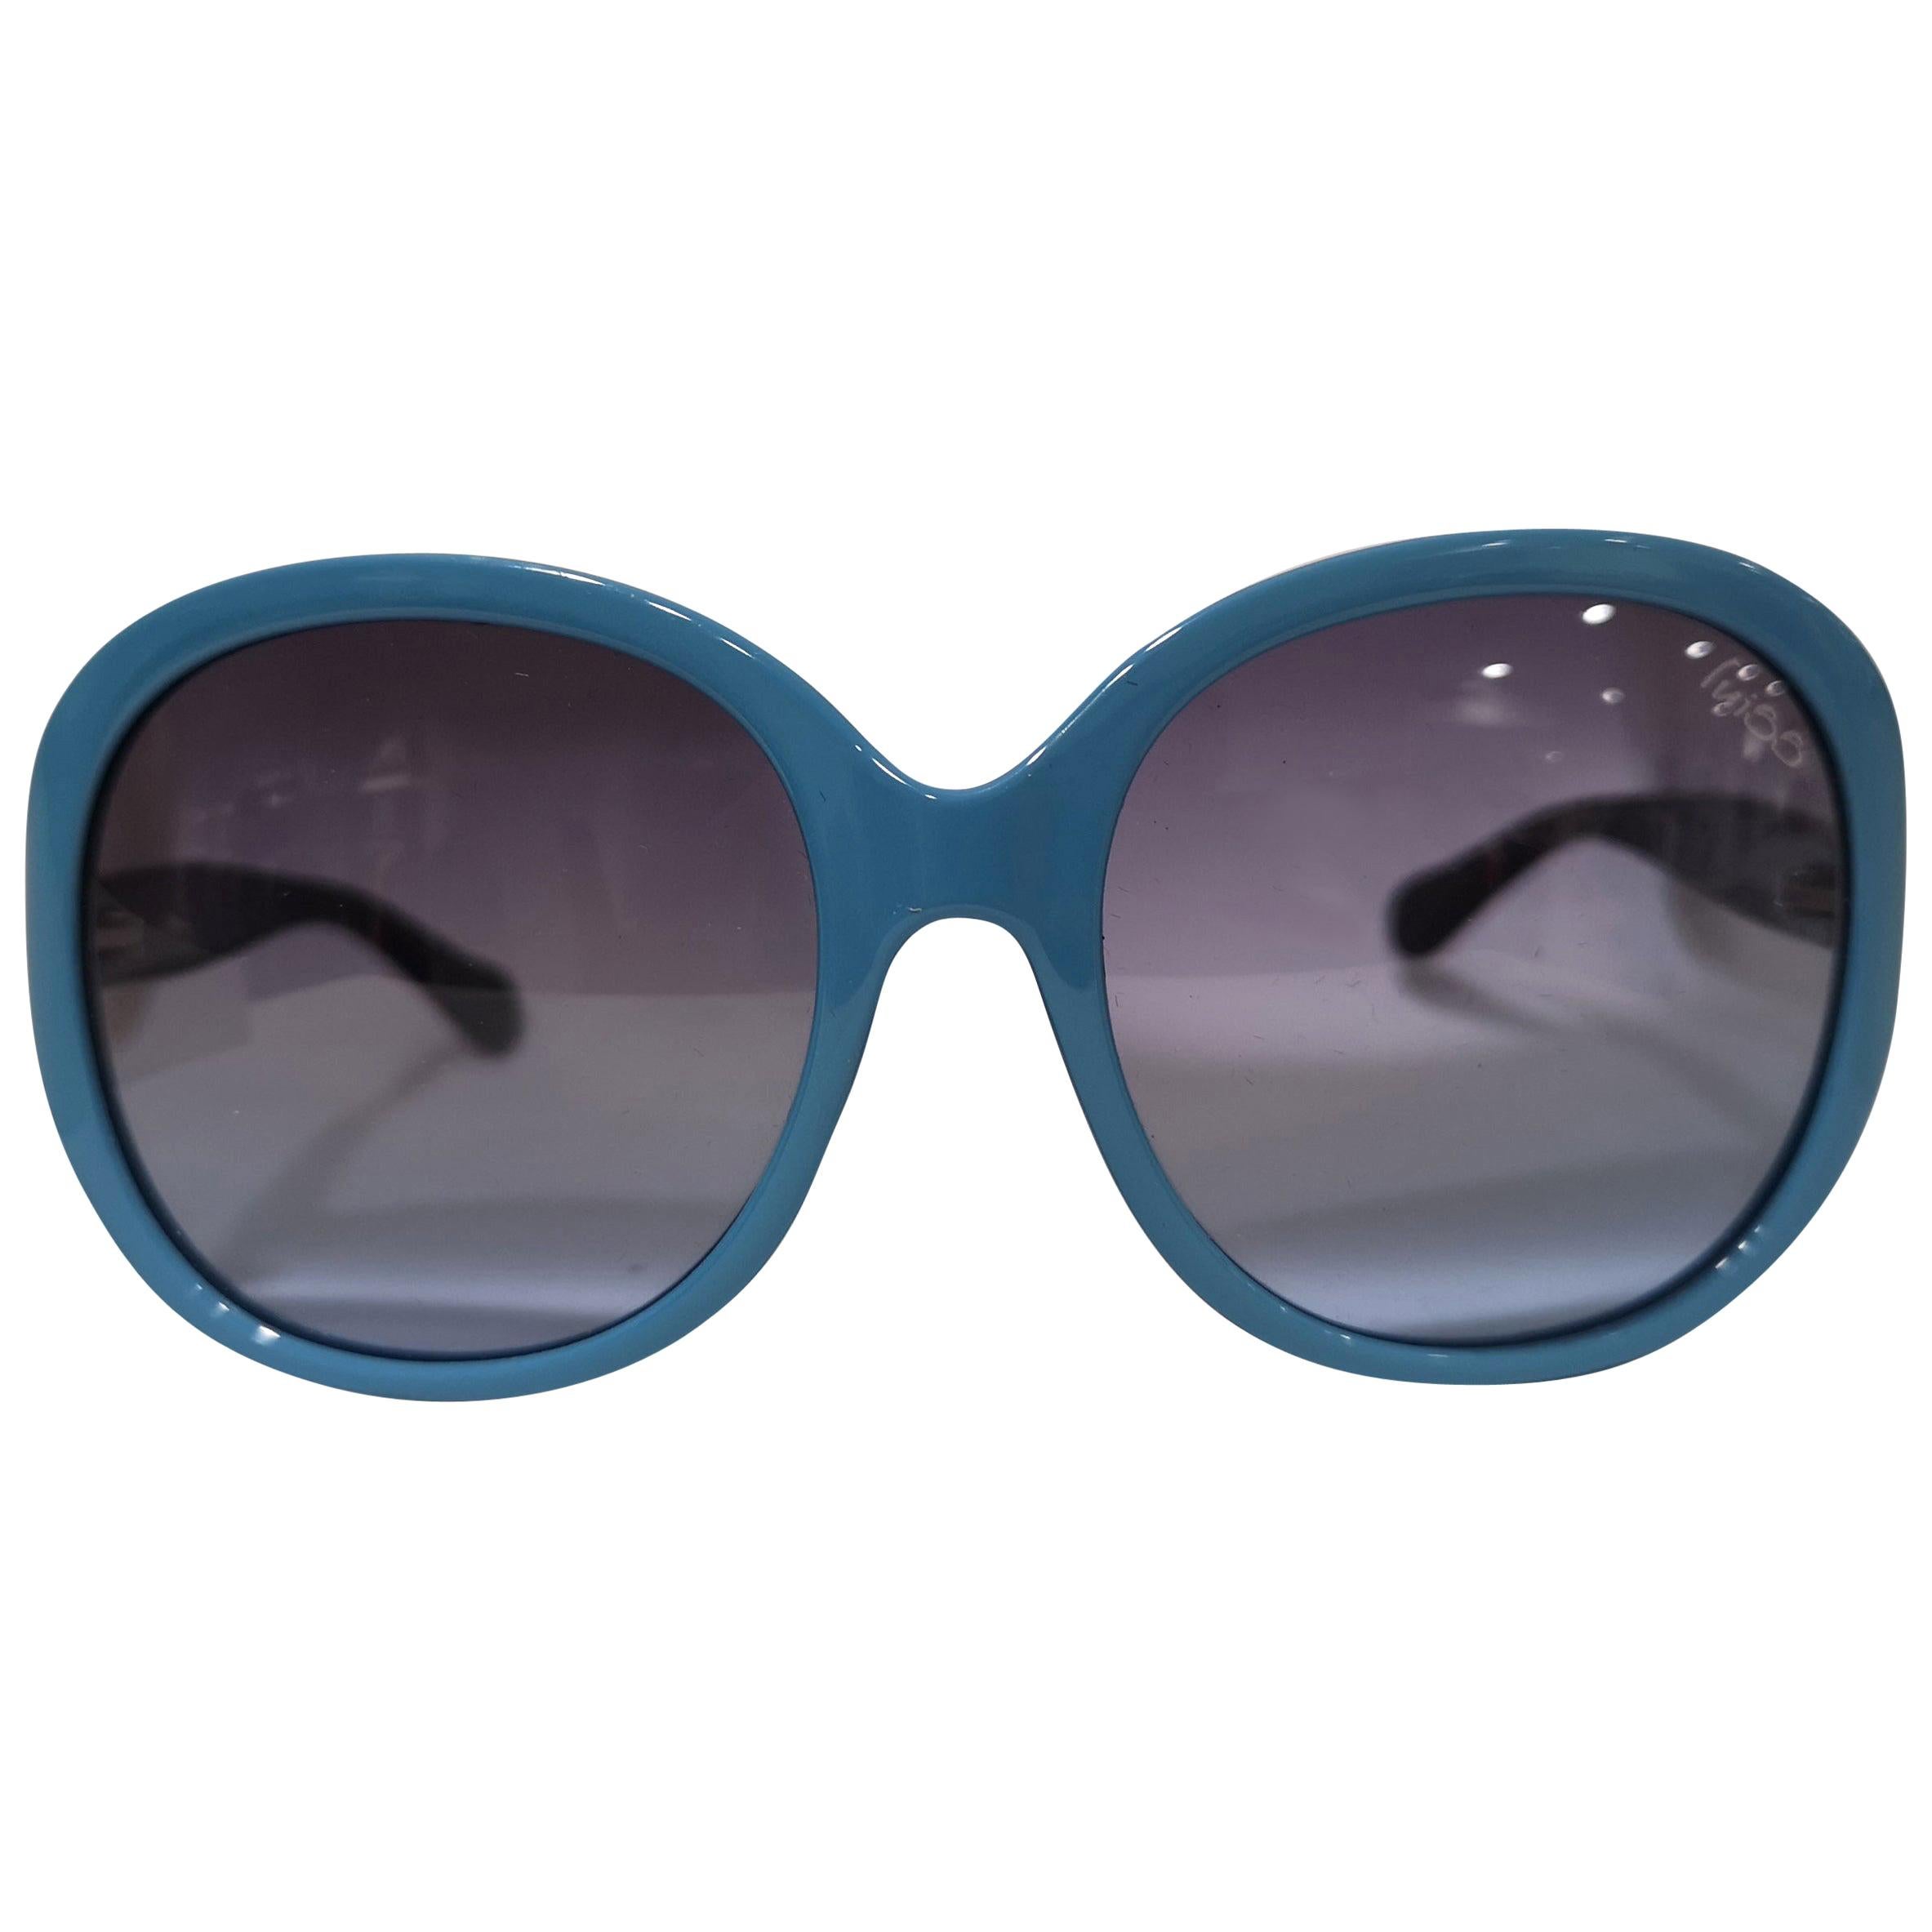 Luisstyle blue sunglasses NWOT 